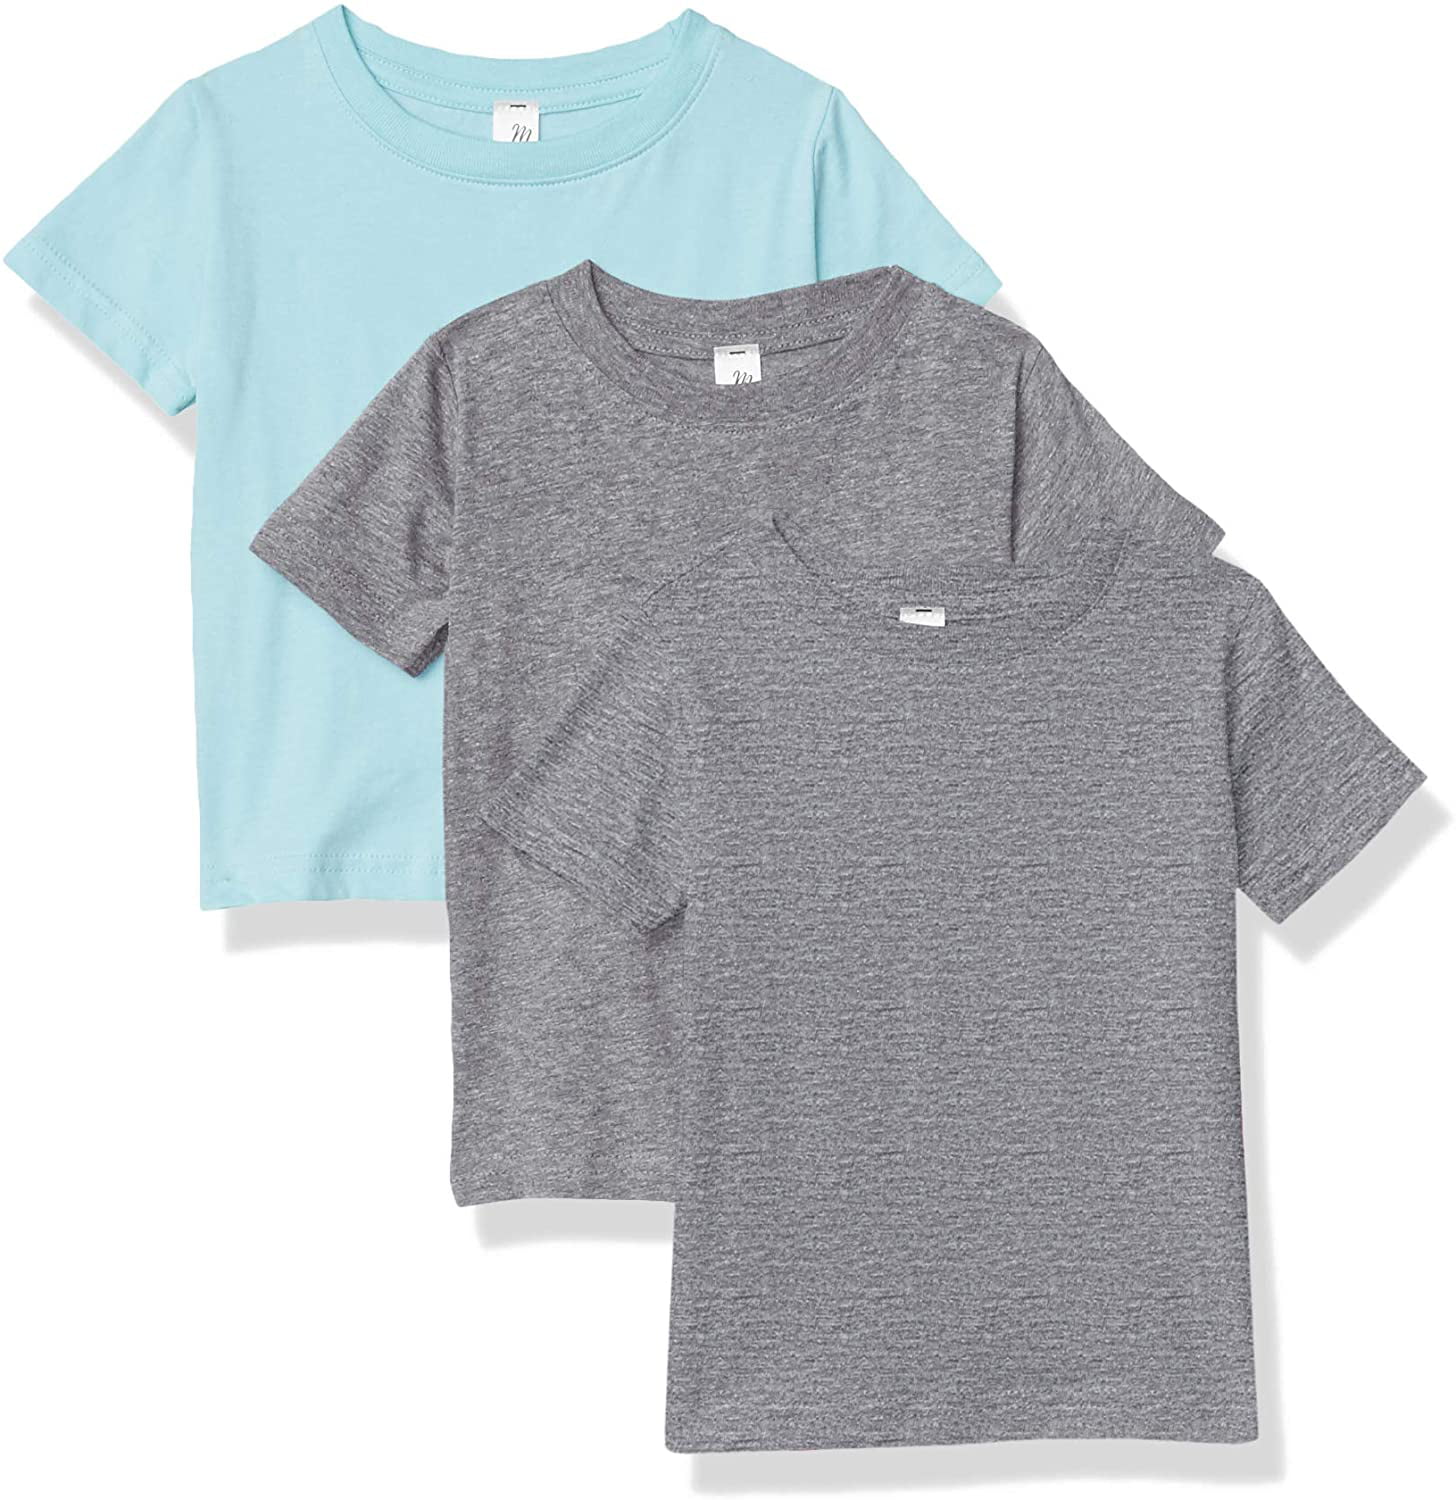 Marky G Apparel Baby-Boys Jersey Short Sleeve T-Shirt 2 Pack 